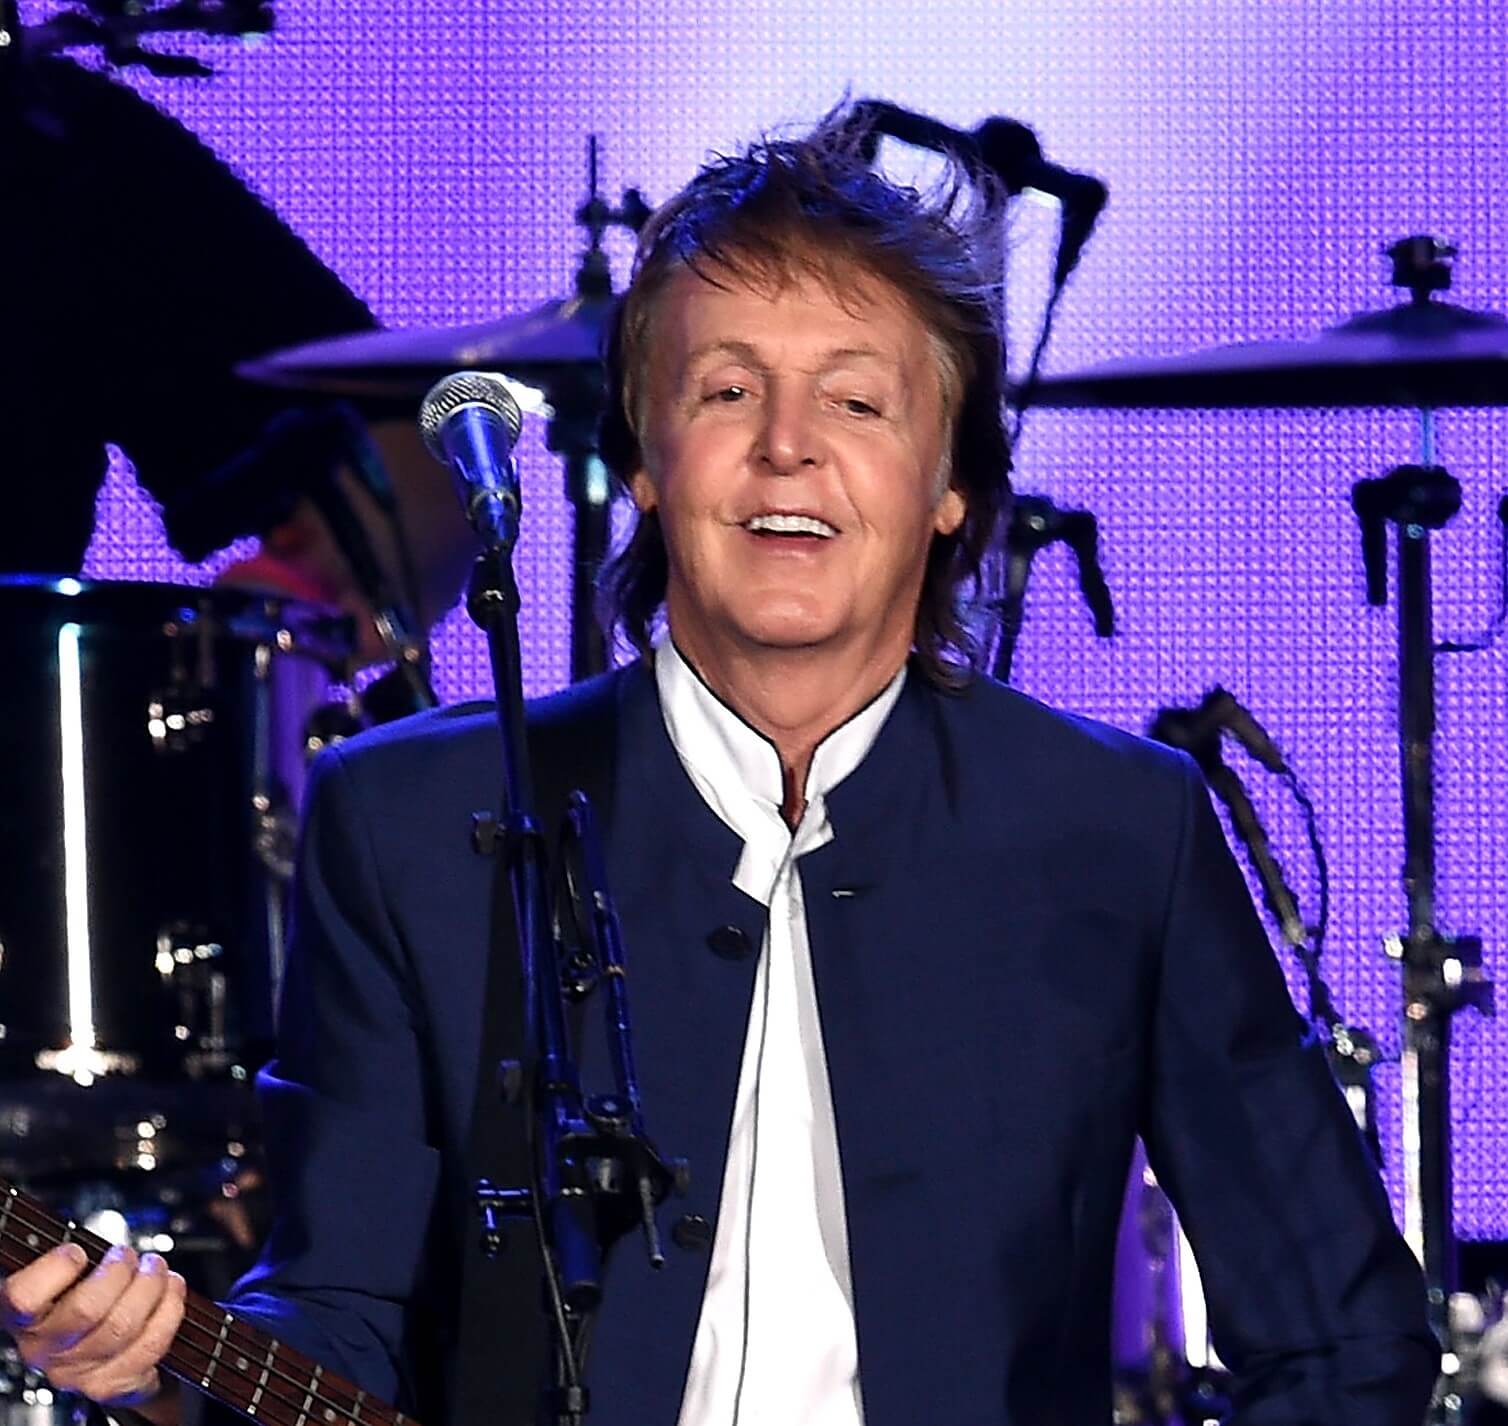 Paul McCartney singing songs in front of a drum set